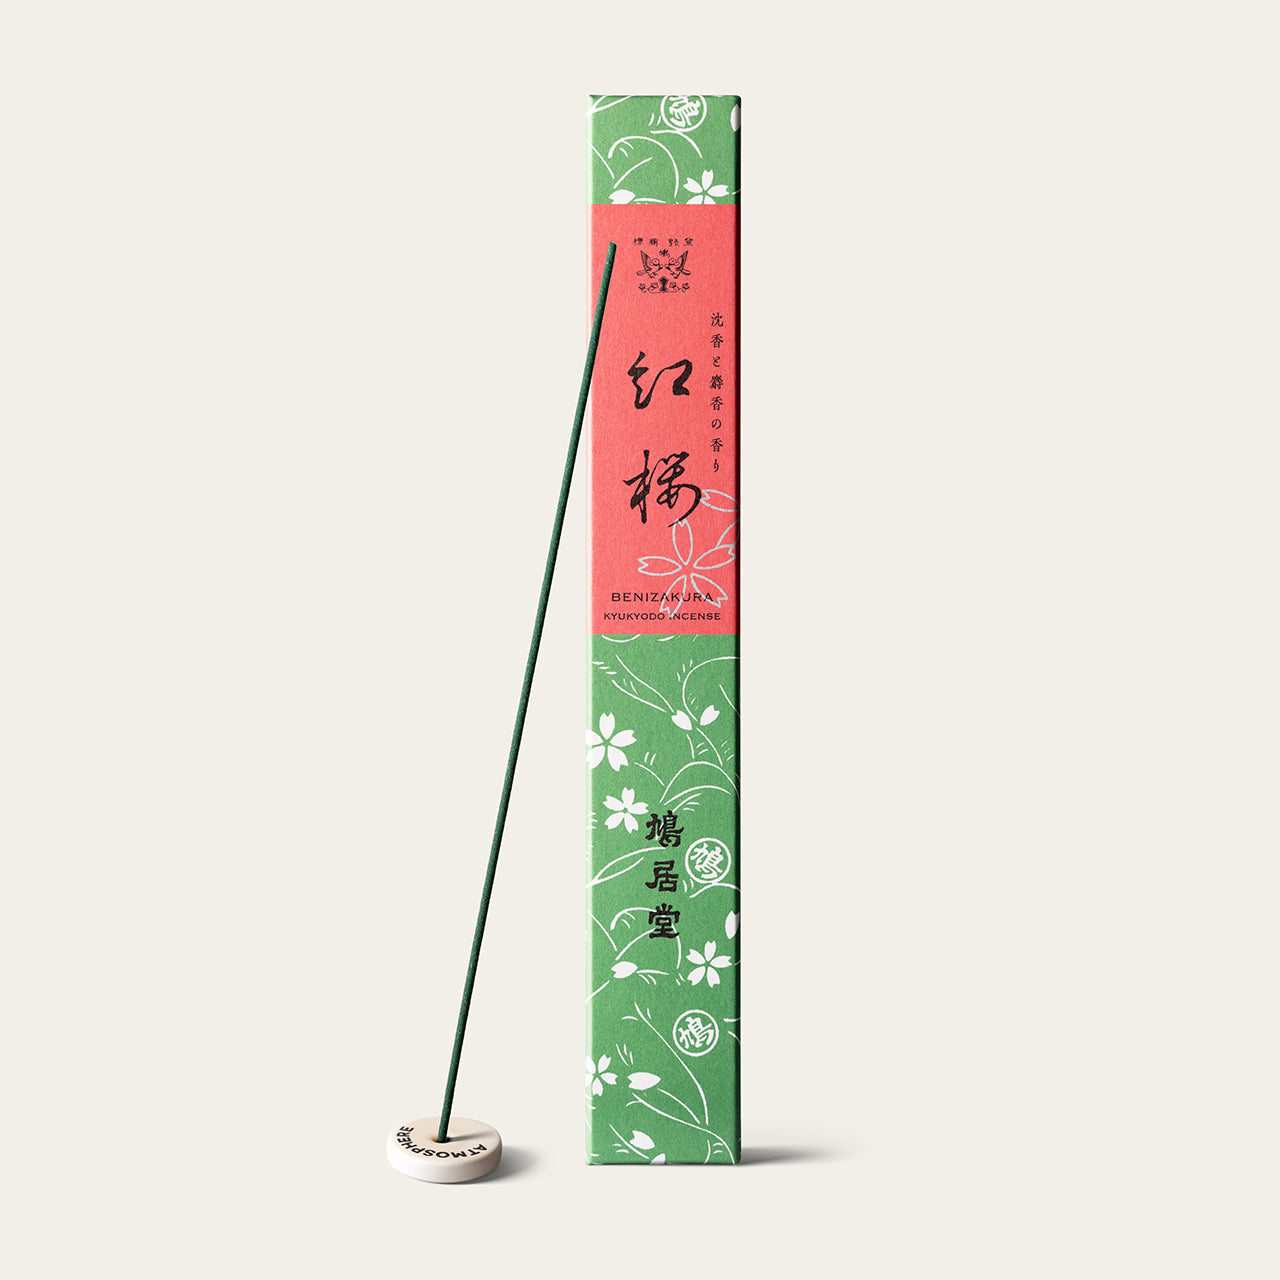 Kyukyodo Red Cherry Blossoms Benizakura 17cm Japanese incense sticks (60 sticks) with Atmosphere ceramic incense holder